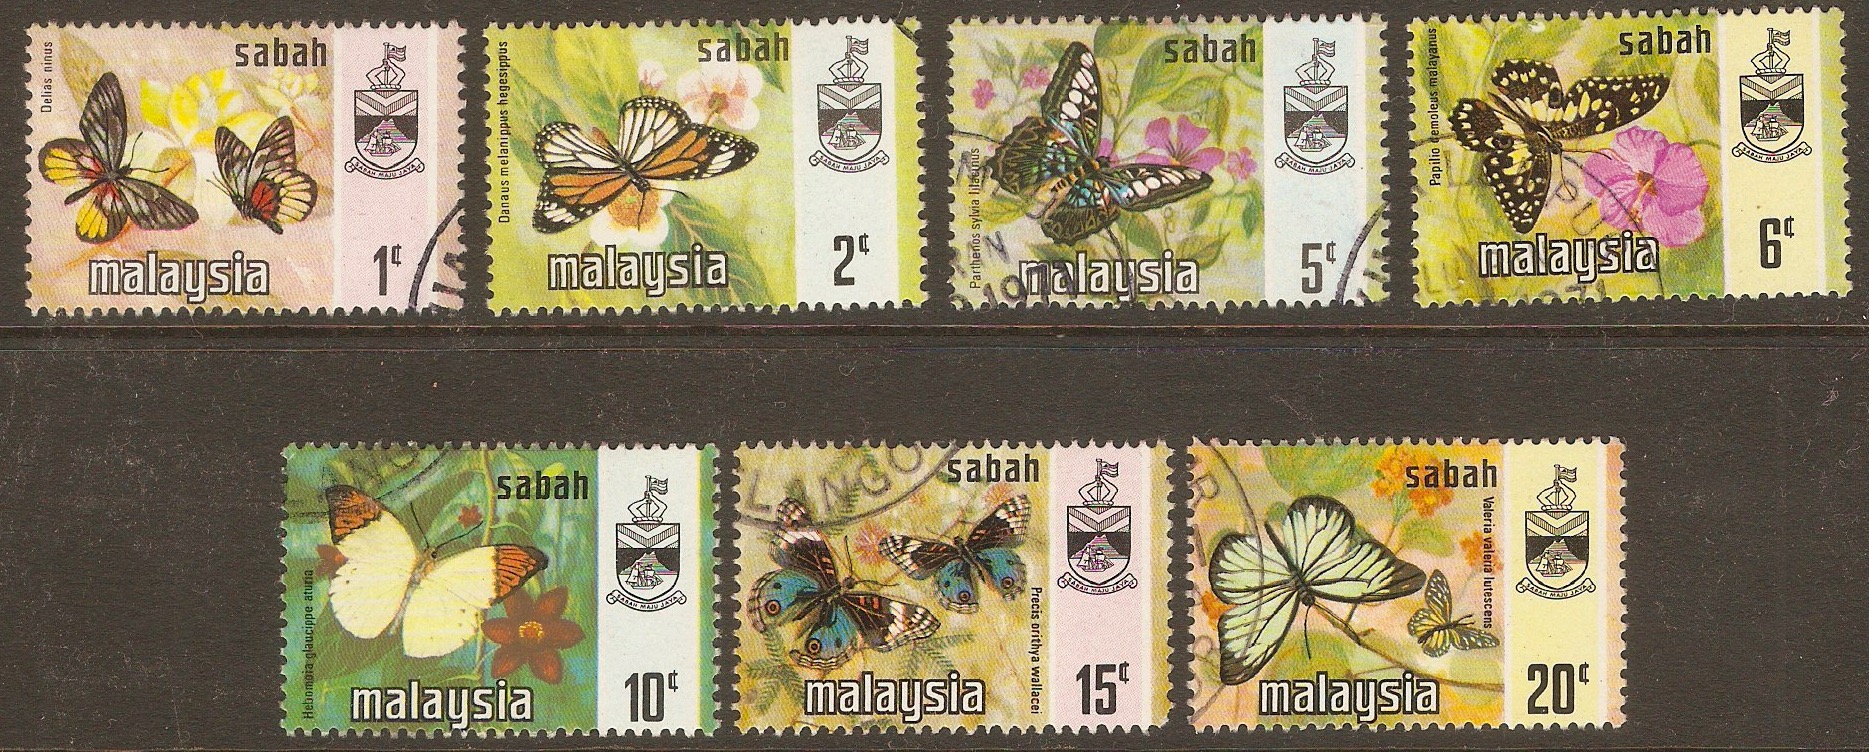 Sabah 1971 Butterflies set. SG432-SG438.